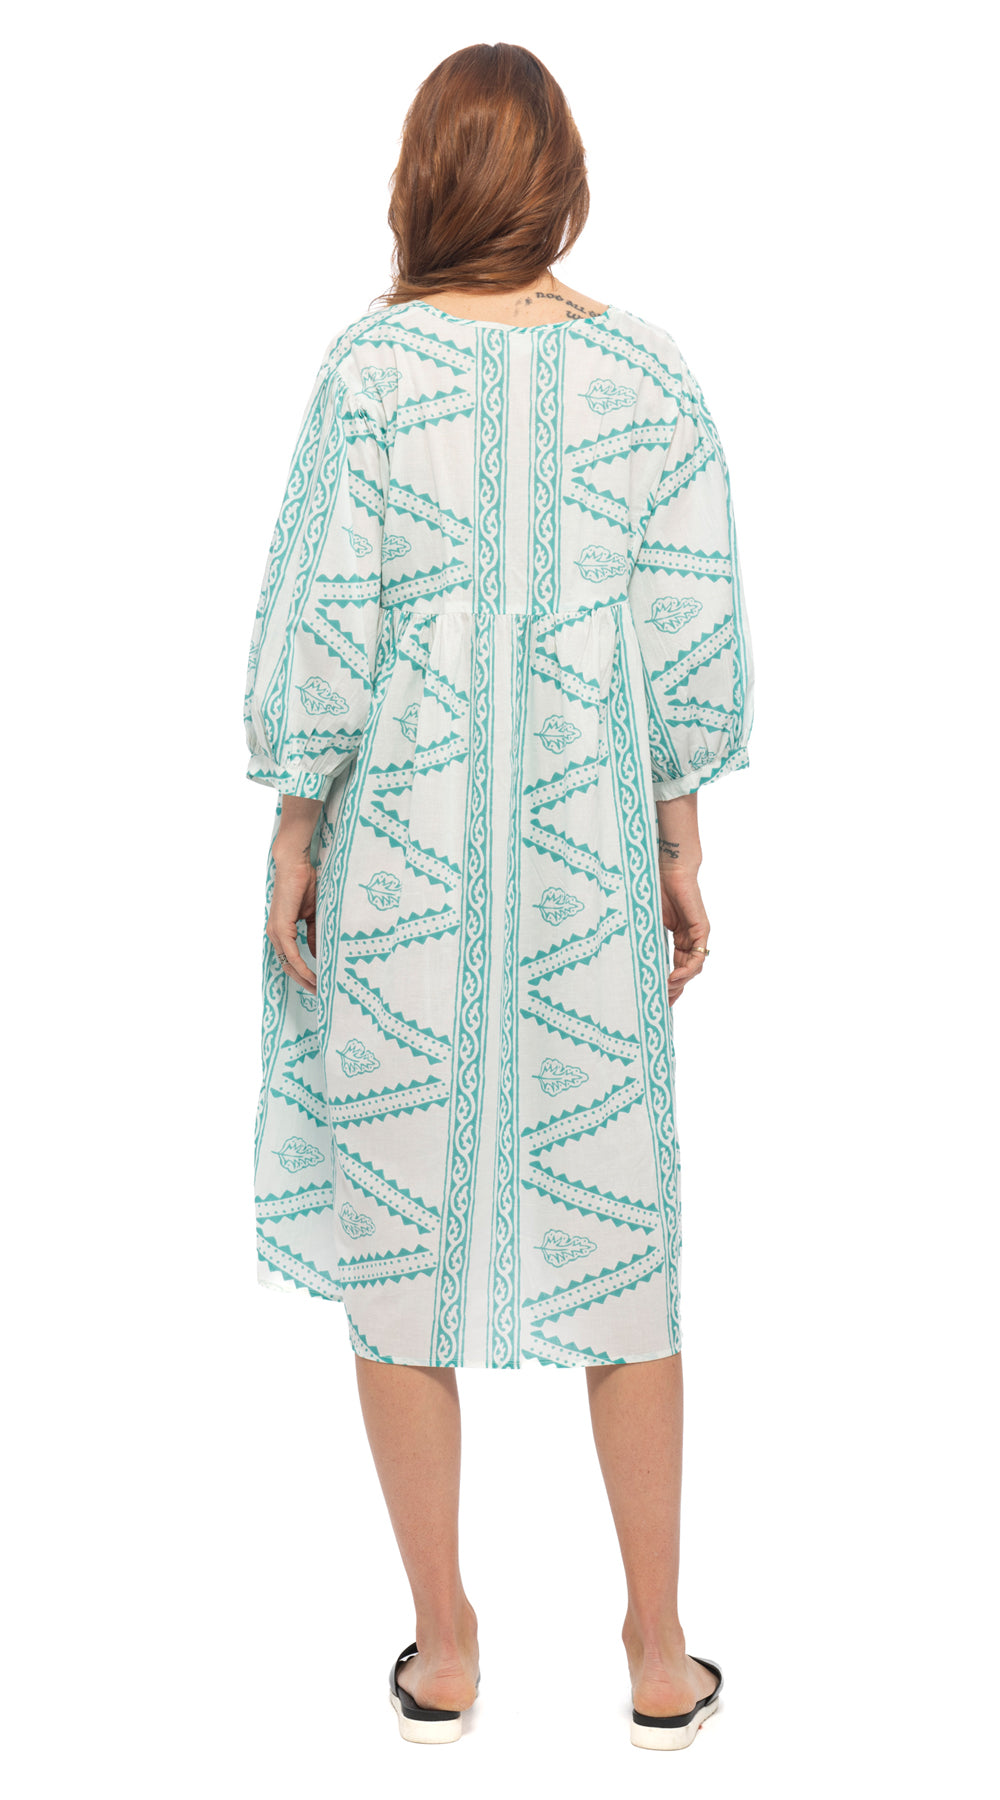 Woodstock Dress - white+turquoise - cotton